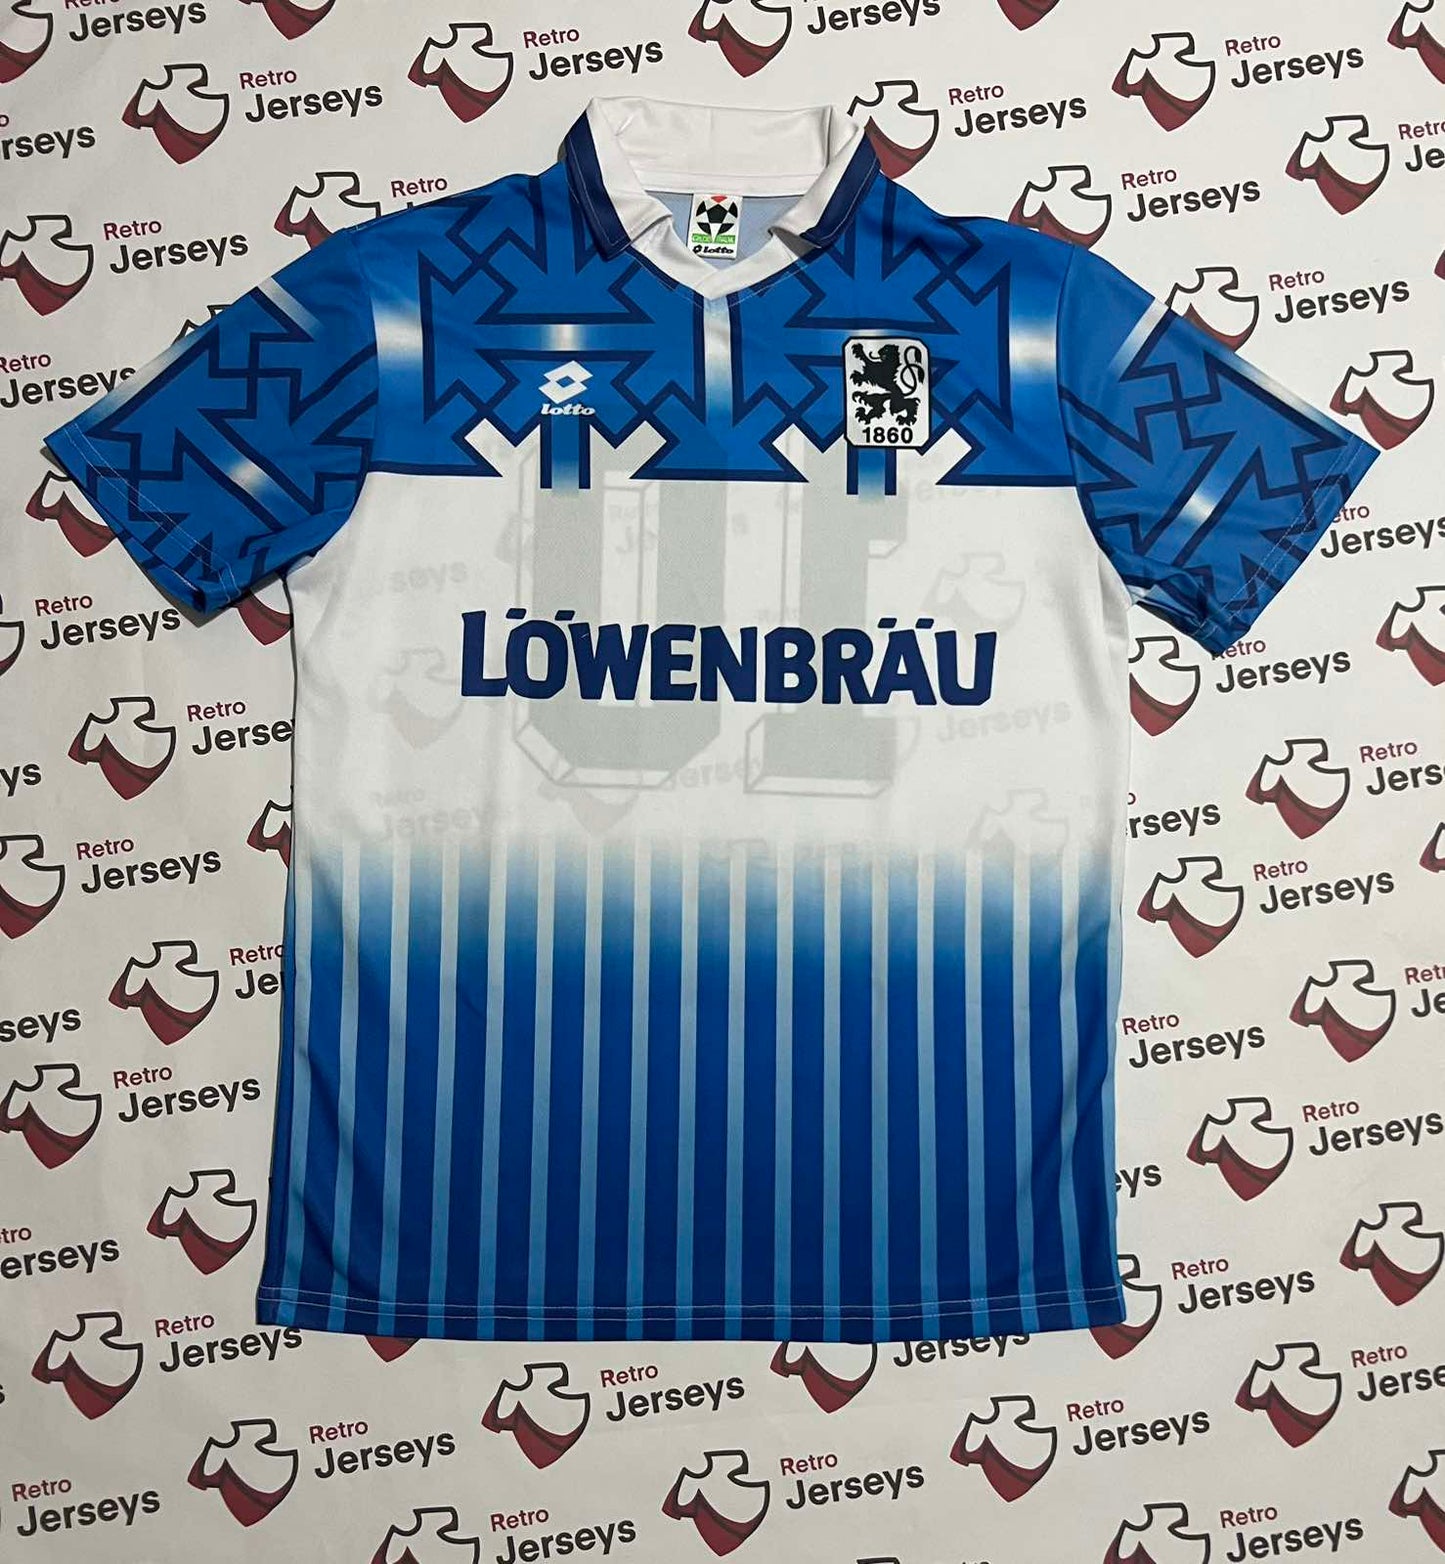 1860 Munich Football Shirts - Club Football Shirts